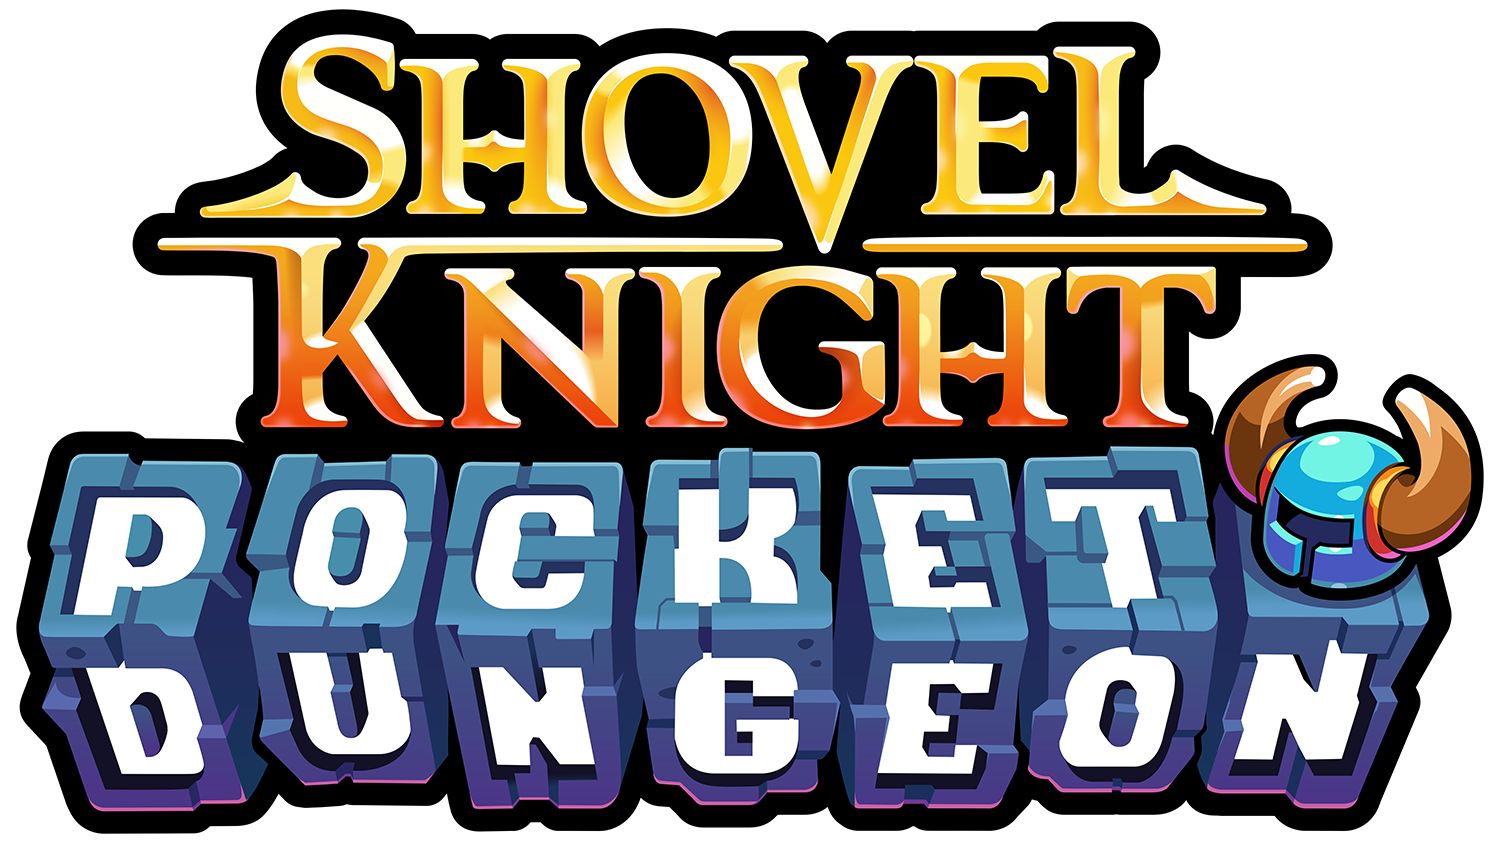 shovel knight pocket dungeon mobile